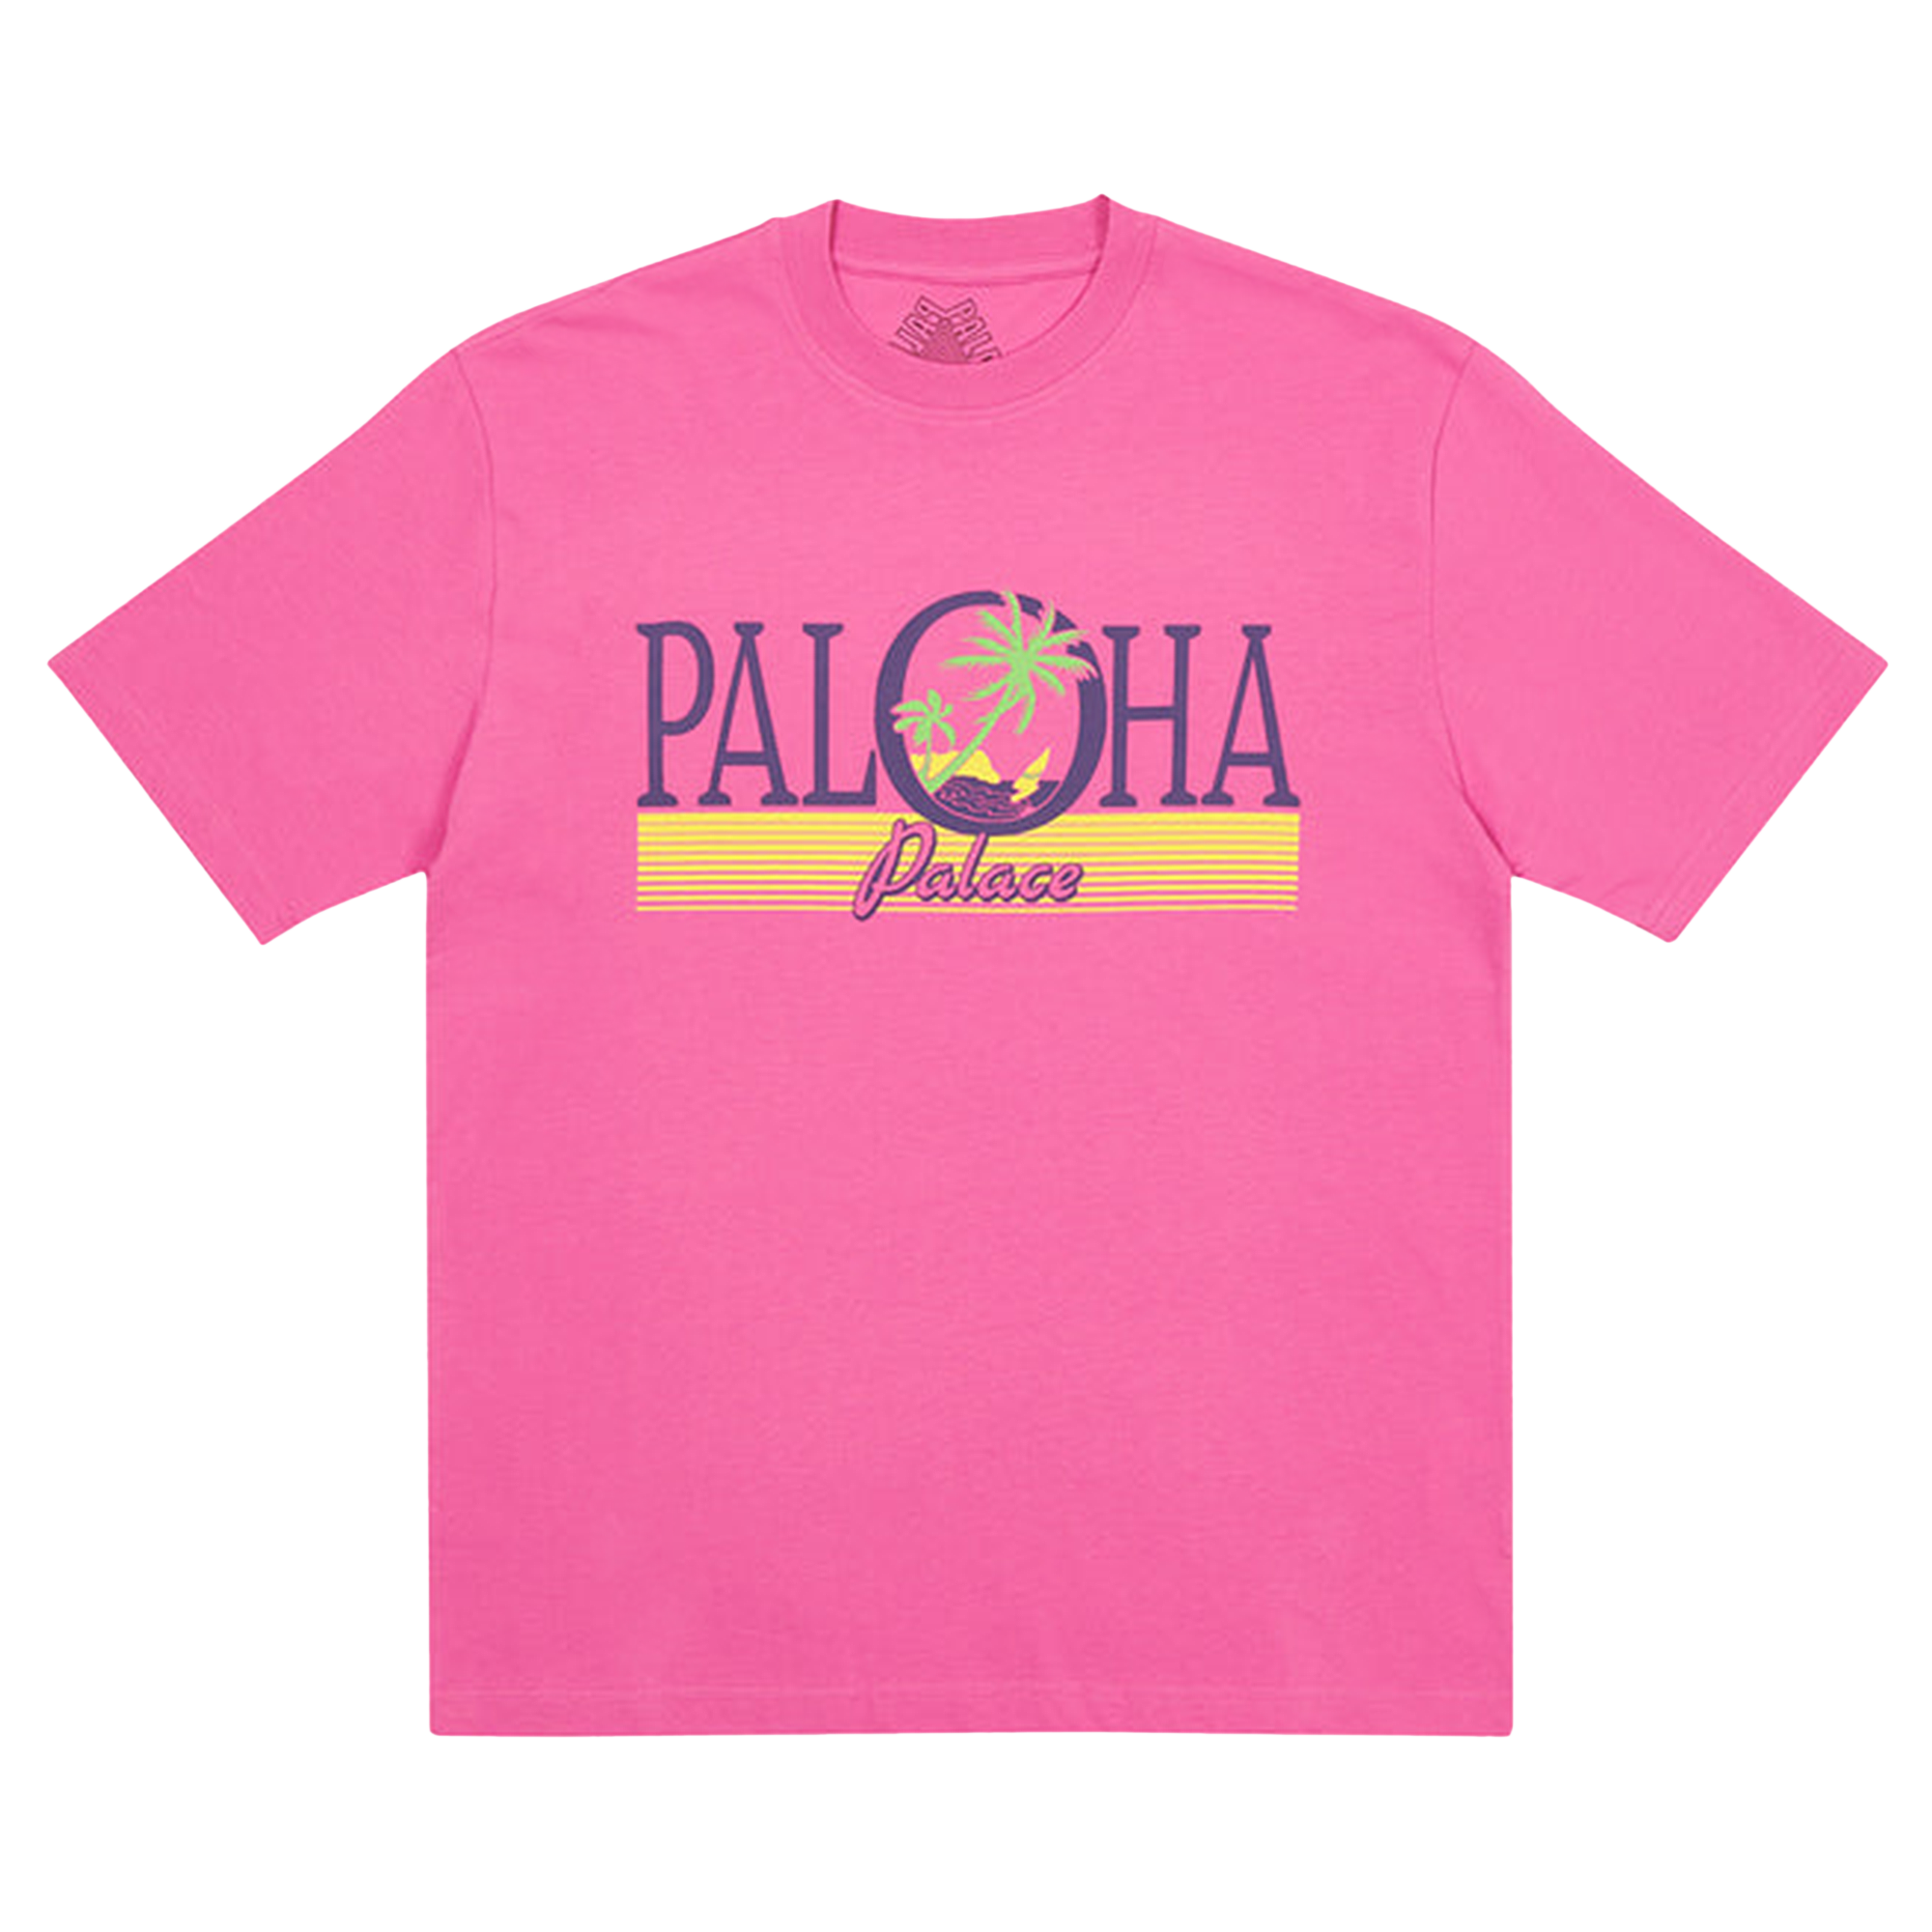 Pre-owned Palace Paloha T-shirt 'pink'